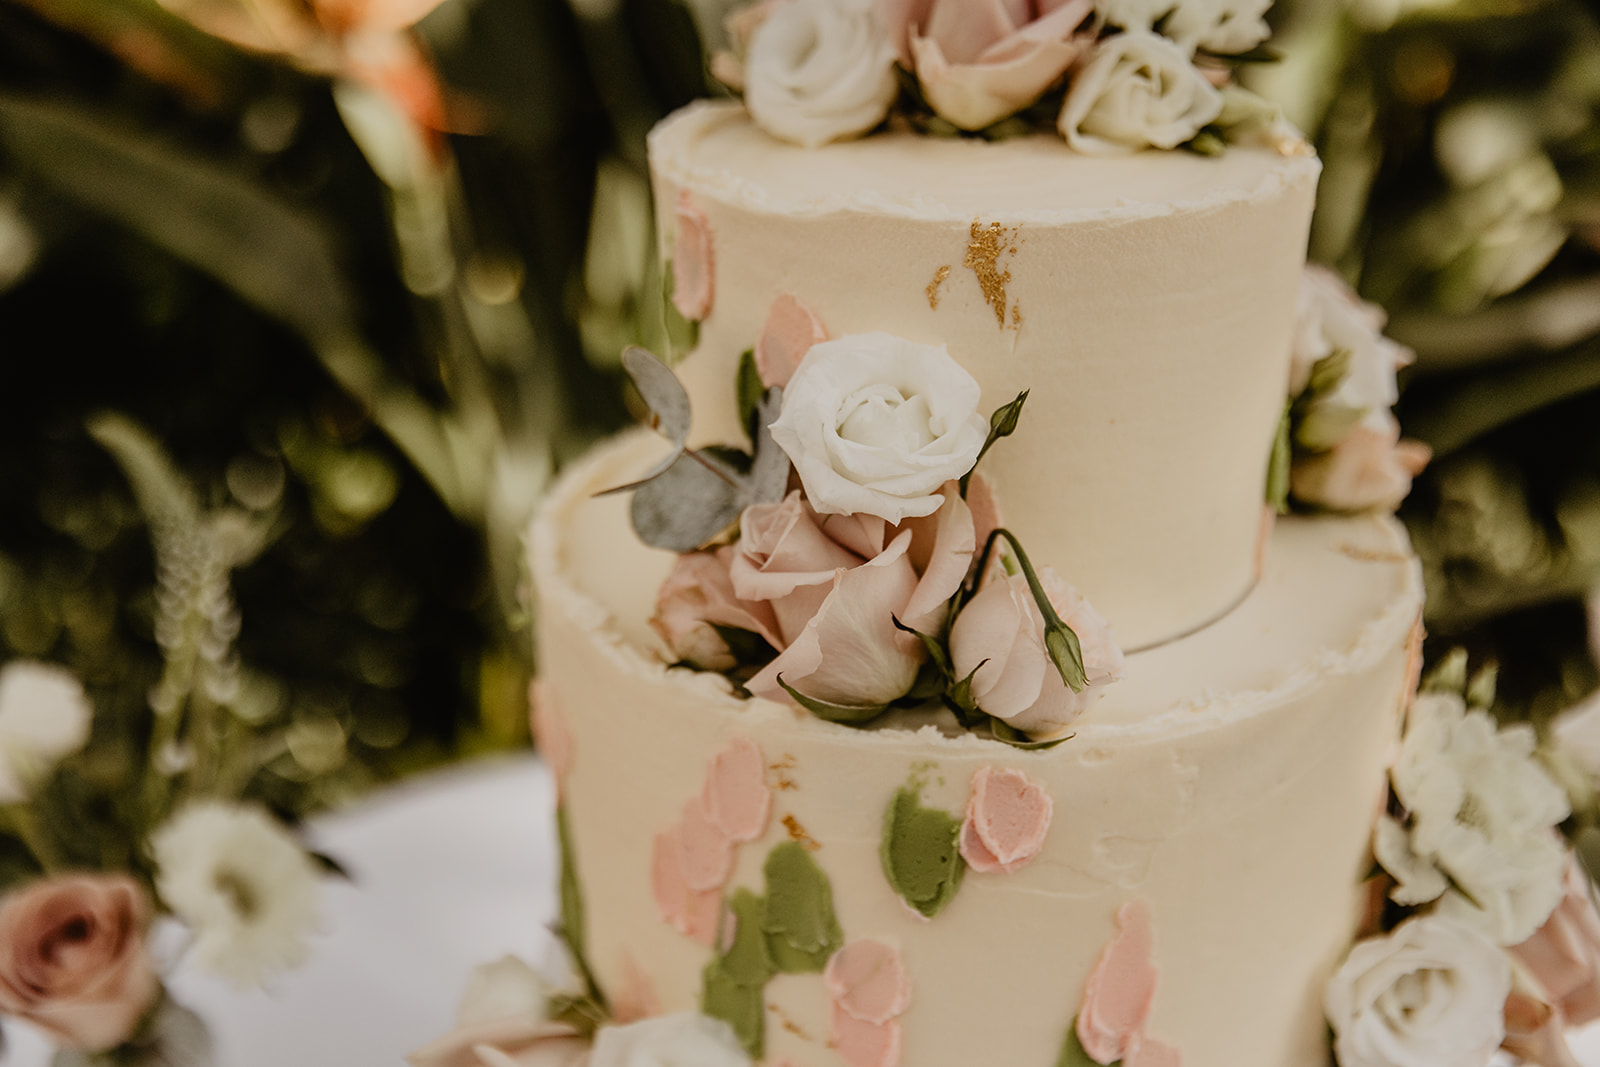 Wedding cake at a RHS Gardens Wisley Wedding. By Olive Joy Photography